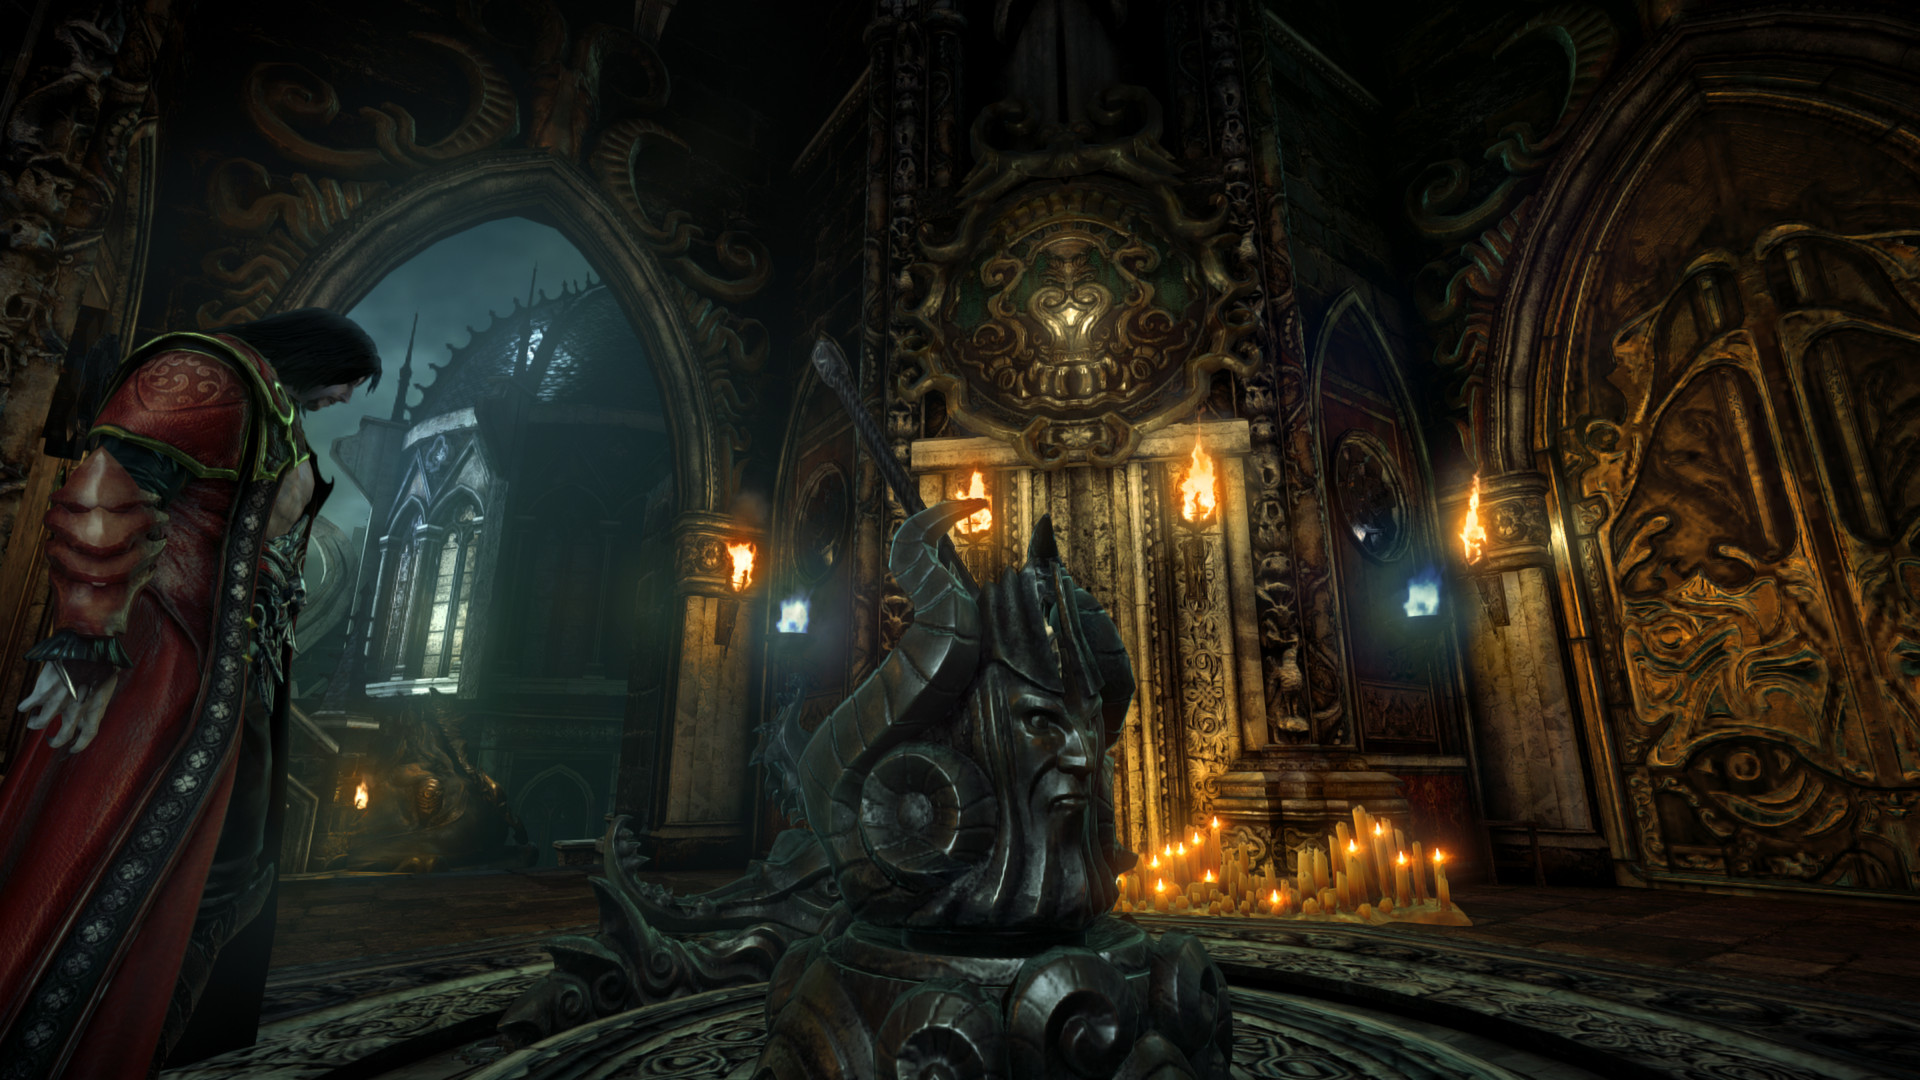 Castlevania: Lords of Shadow 2 no Steam